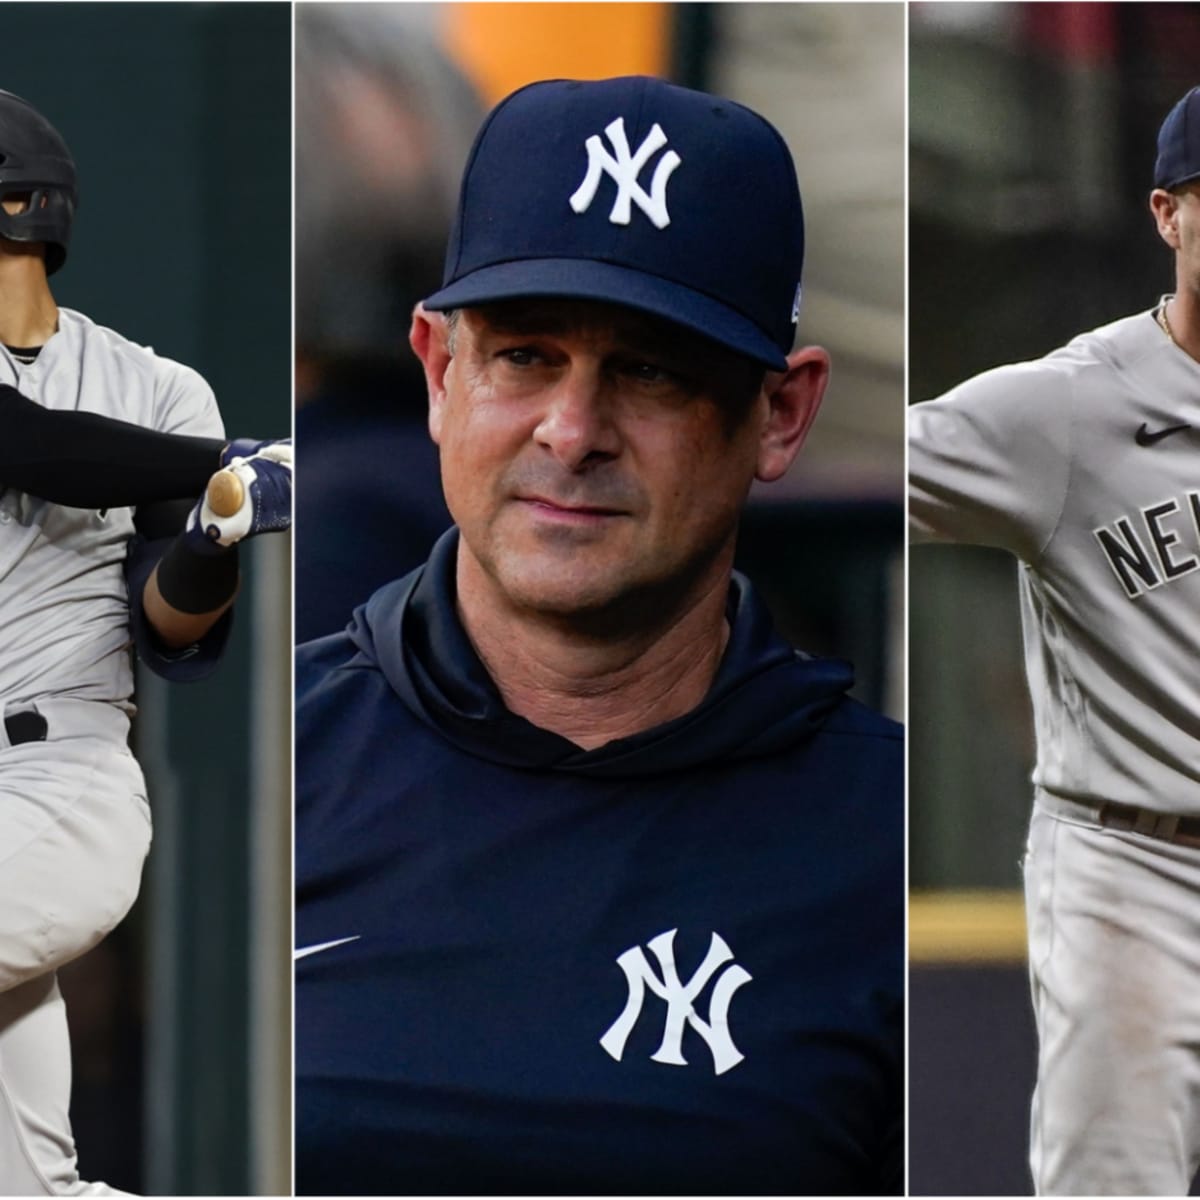 New York Yankees Prospect Oswald Peraza Smacks Three Hits in Yankee Stadium  Debut - Sports Illustrated NY Yankees News, Analysis and More